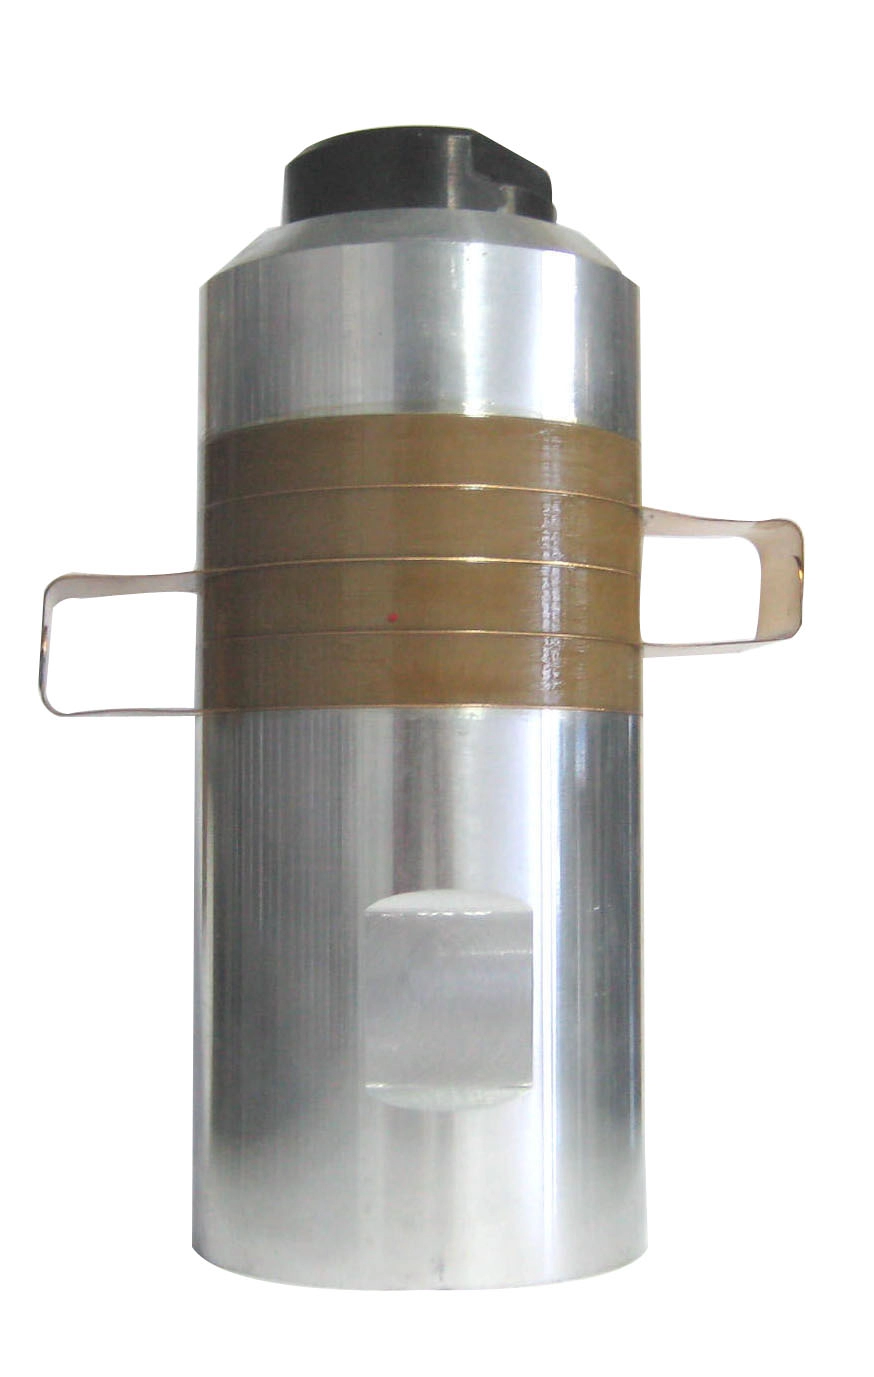 7015-4Z Ultrasonic high power welding transducer